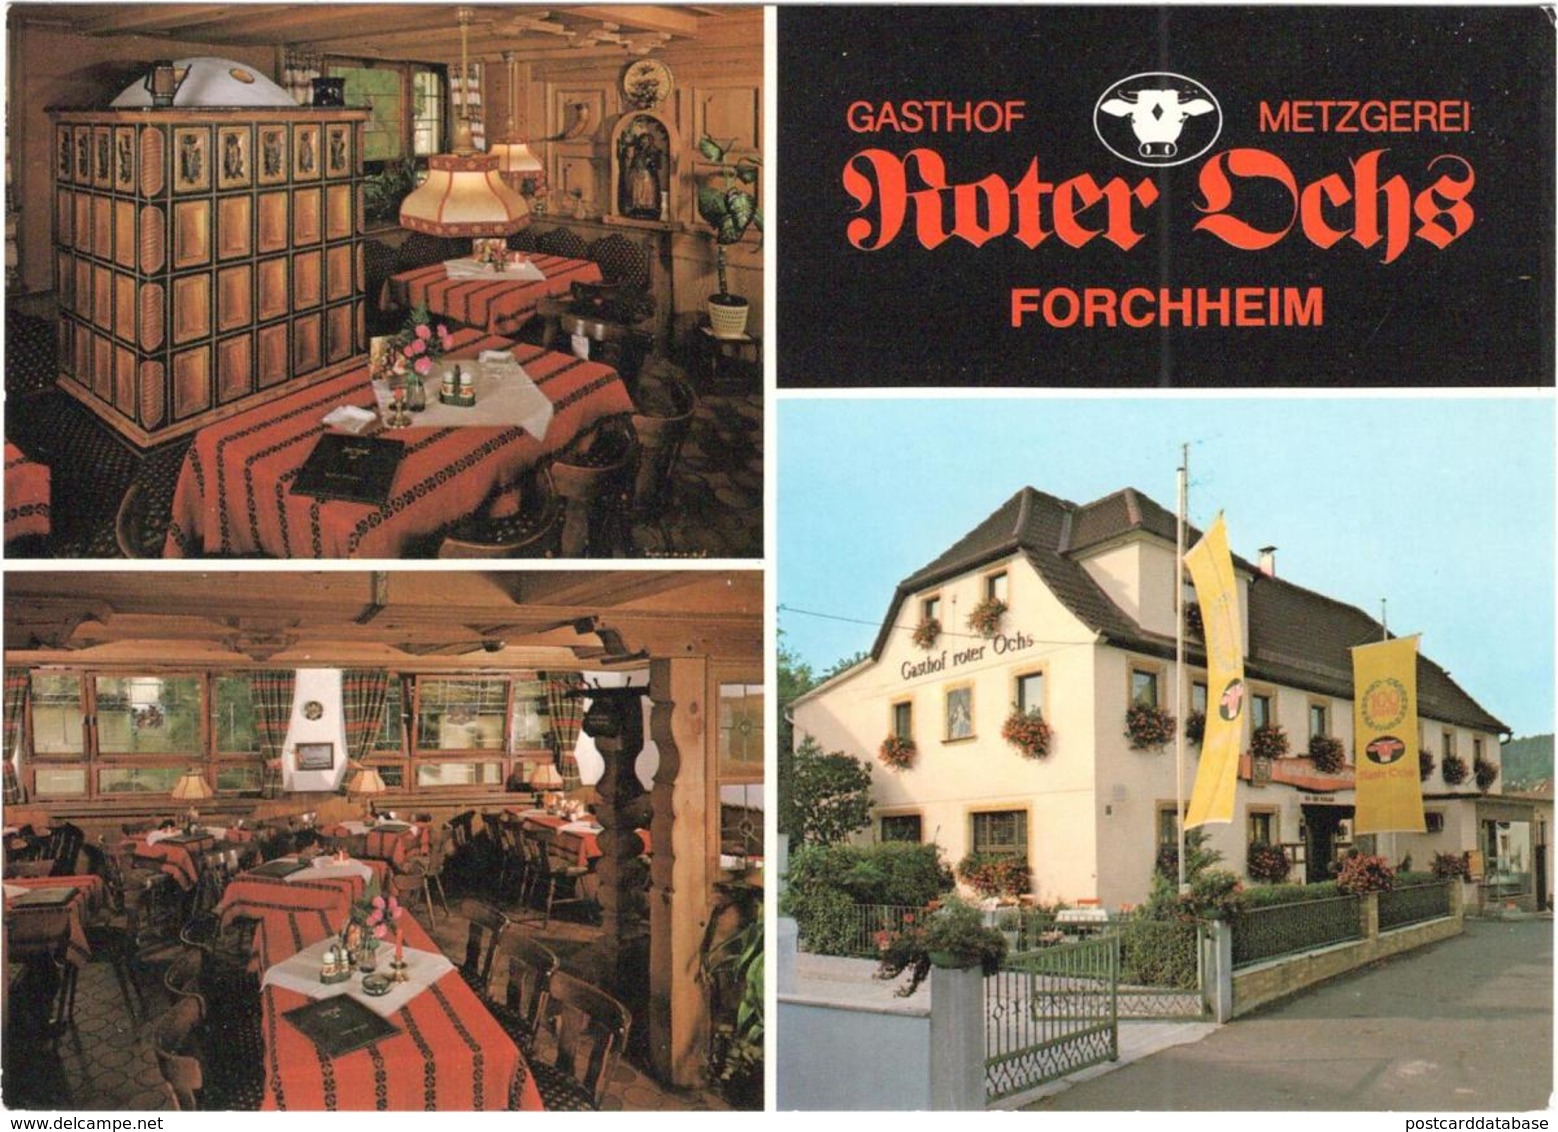 Gasthof Metzgerei Roter Ochs - Forchheim - & Hotel - Forchheim